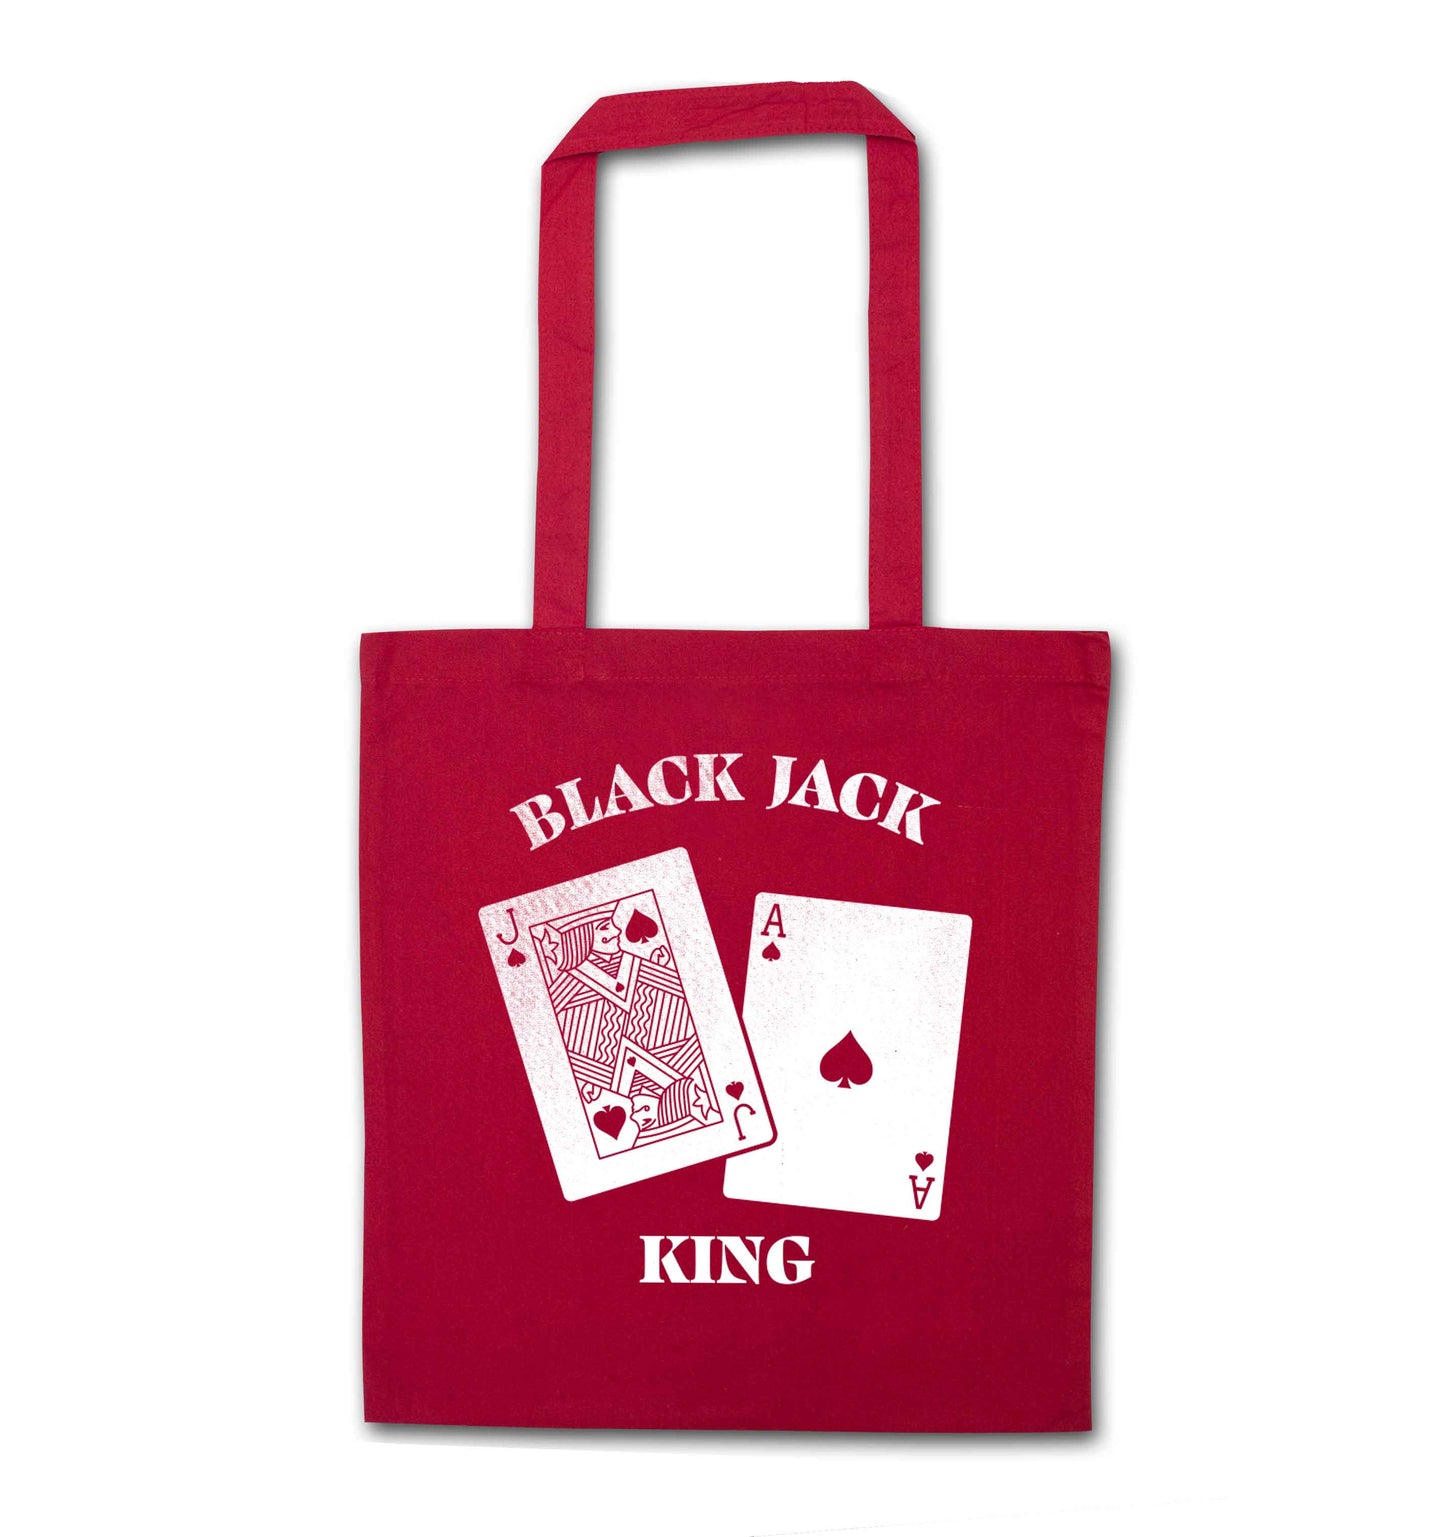 Blackjack king red tote bag